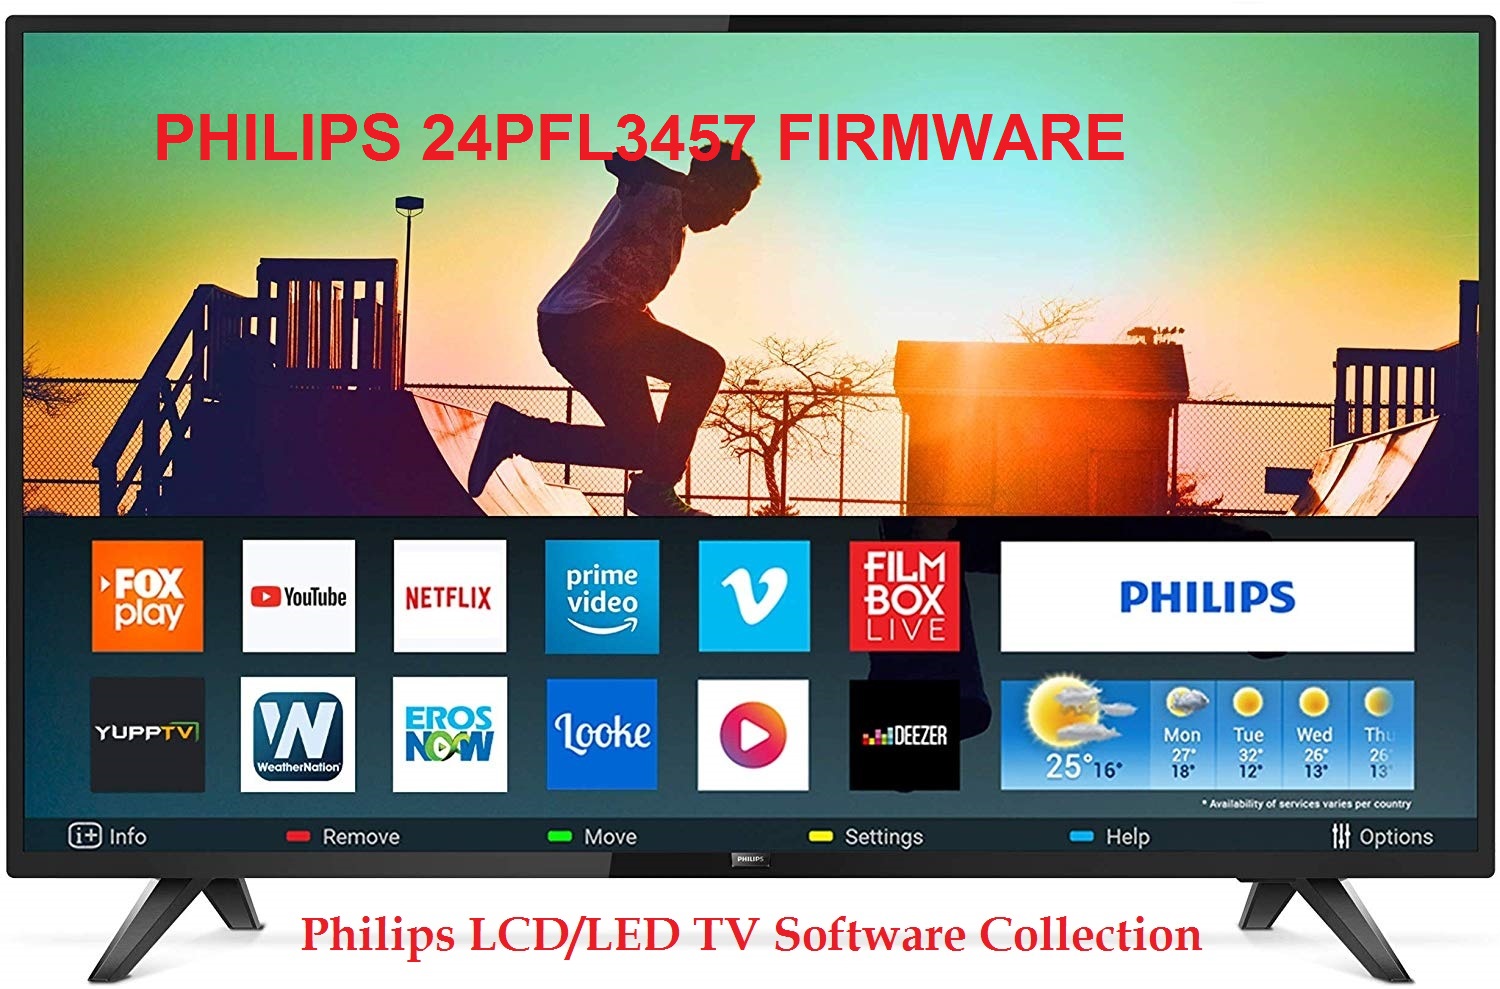 Philips 24Pfl3457